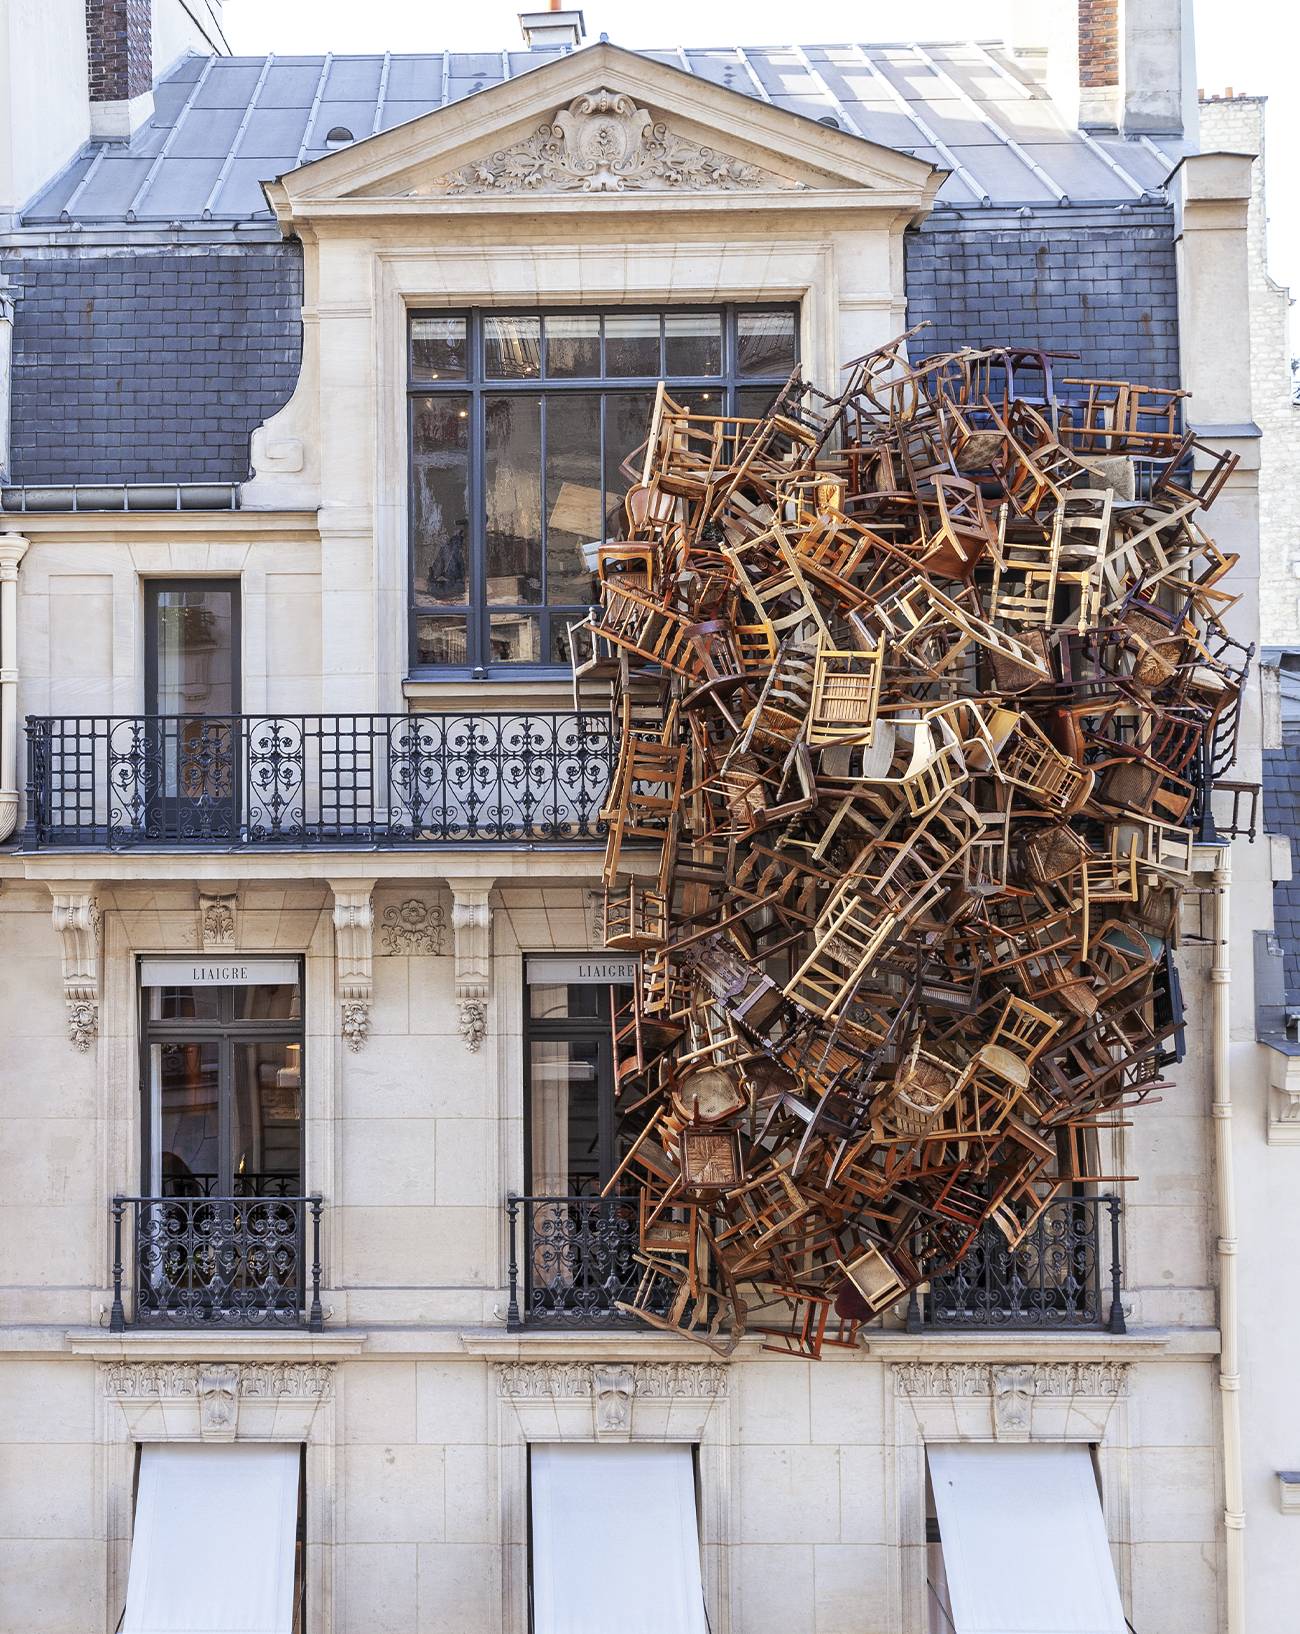 Tadashi Kawamata, Art contemporain, Design, Chaises, Façade Boutique Liaigre Paris